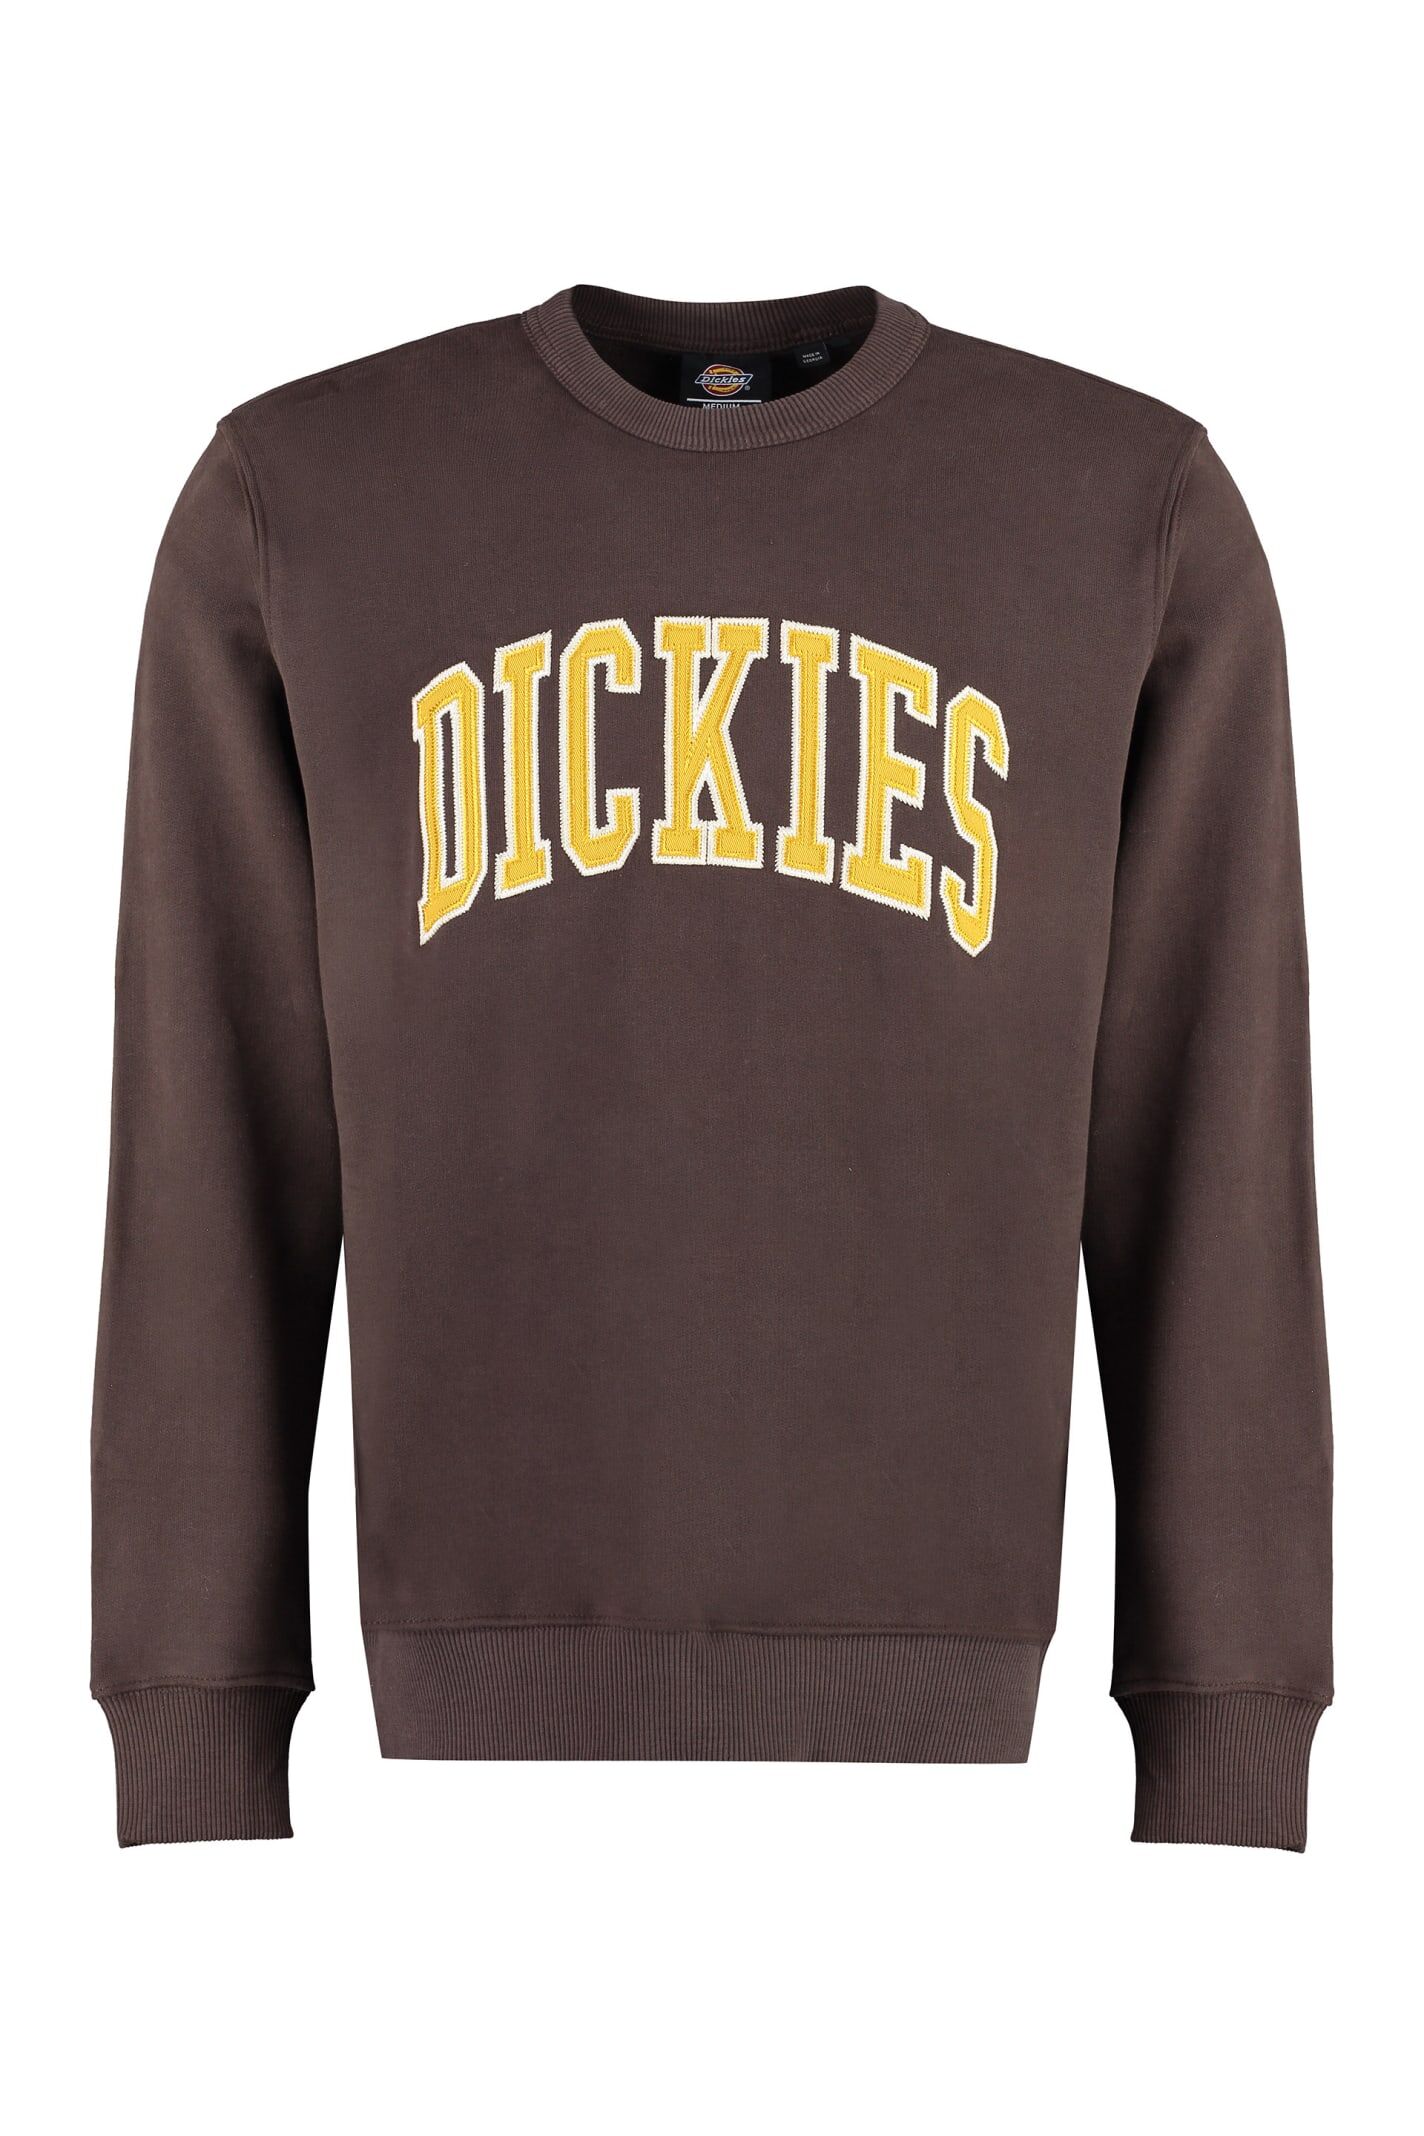 Dickies Logo Detail Cotton Sweatshirt - brown - male - Size: Small